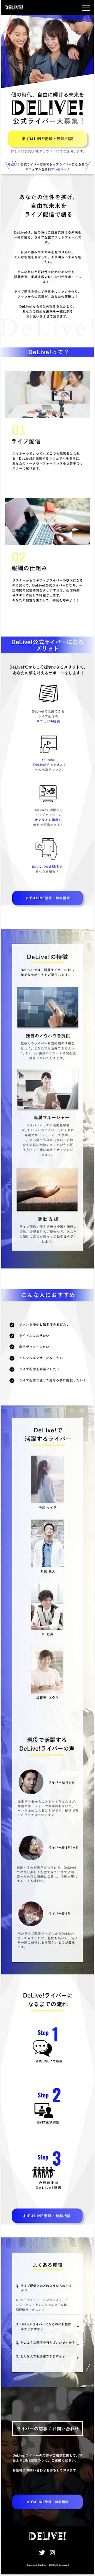 【LP】配信サービス ライバー募集 -2